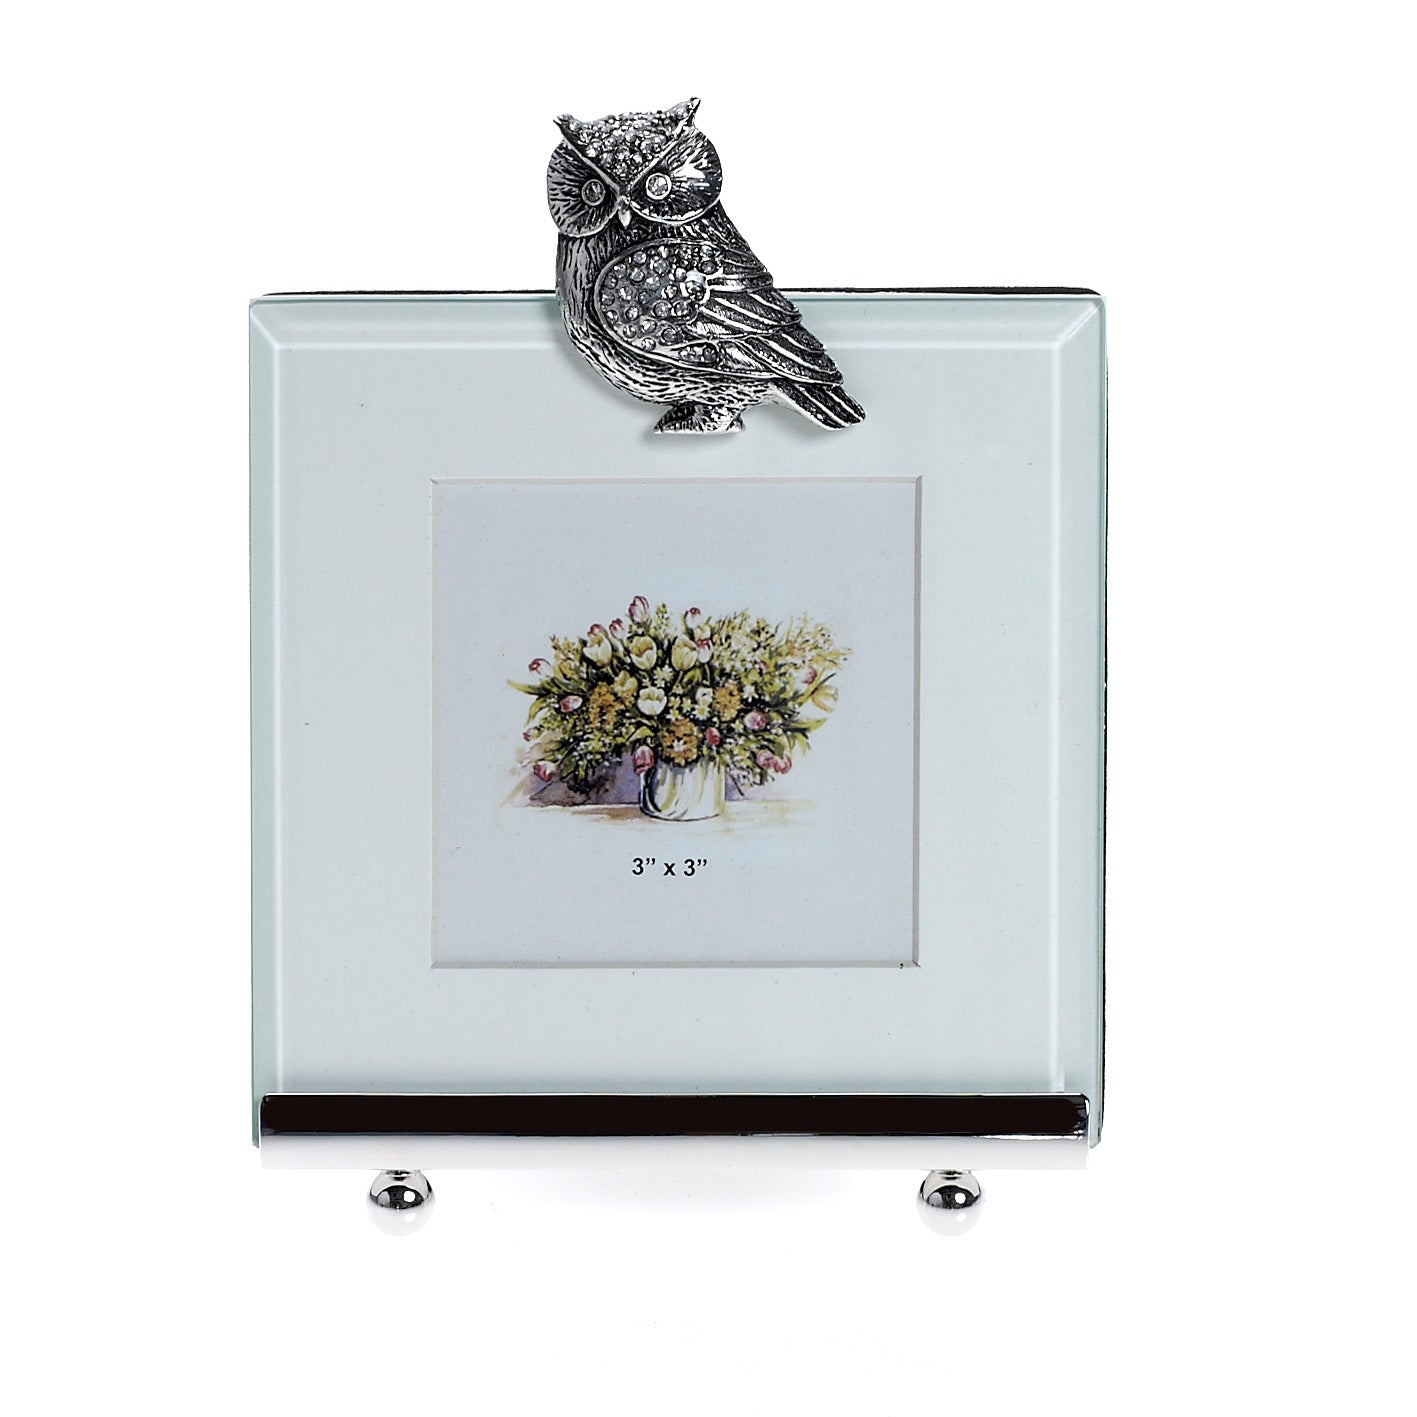 Owl Photo Frame